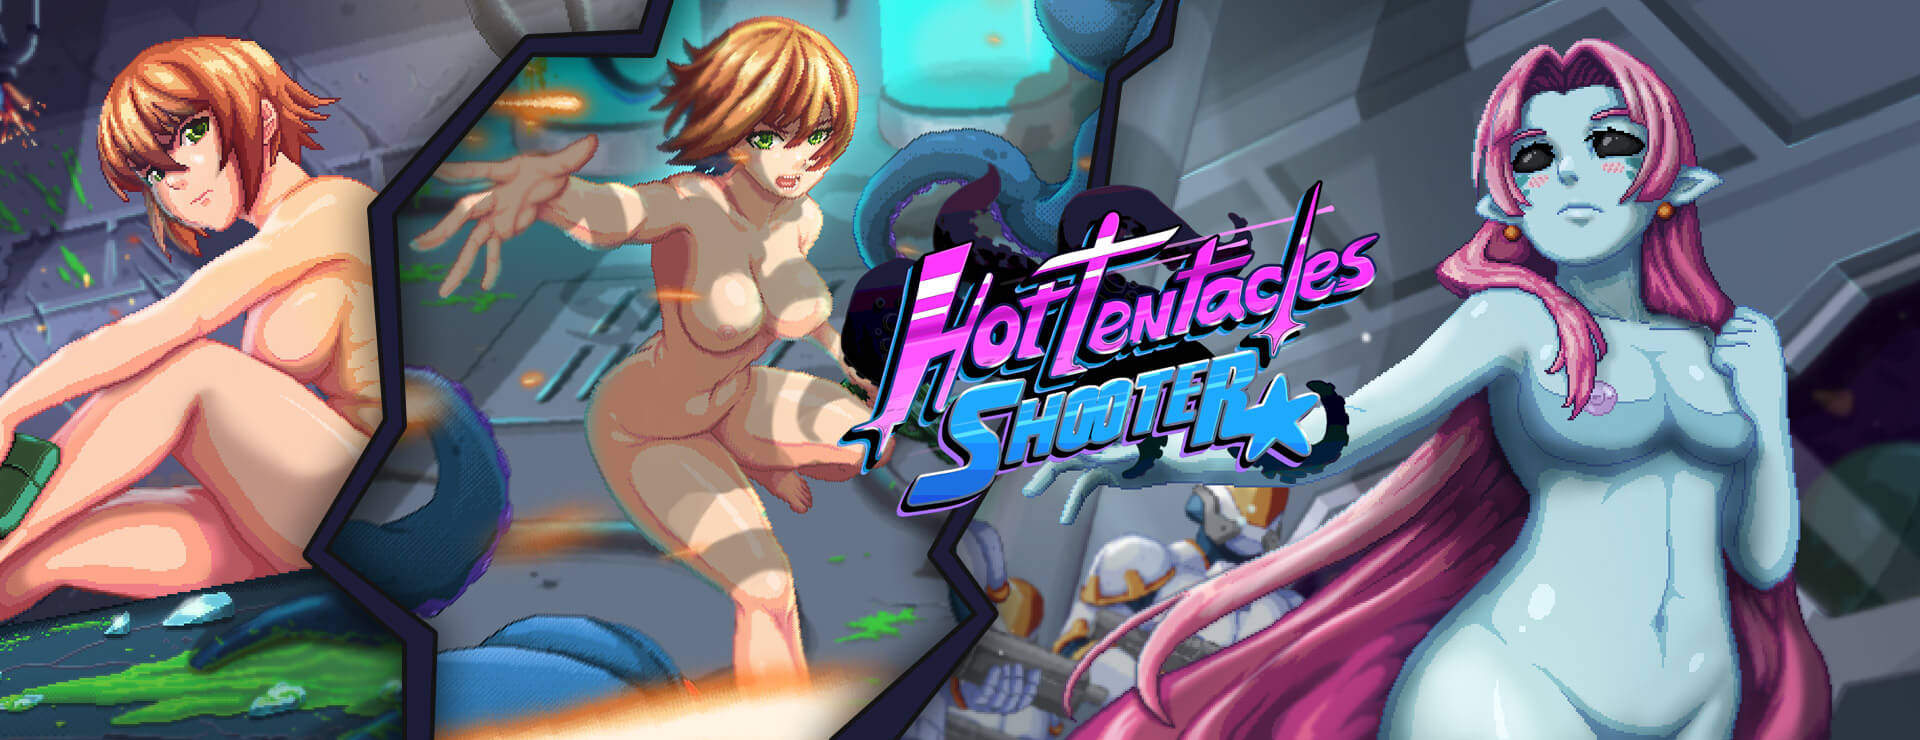 Hot Tentacles Shooter - Action Adventure Spiel